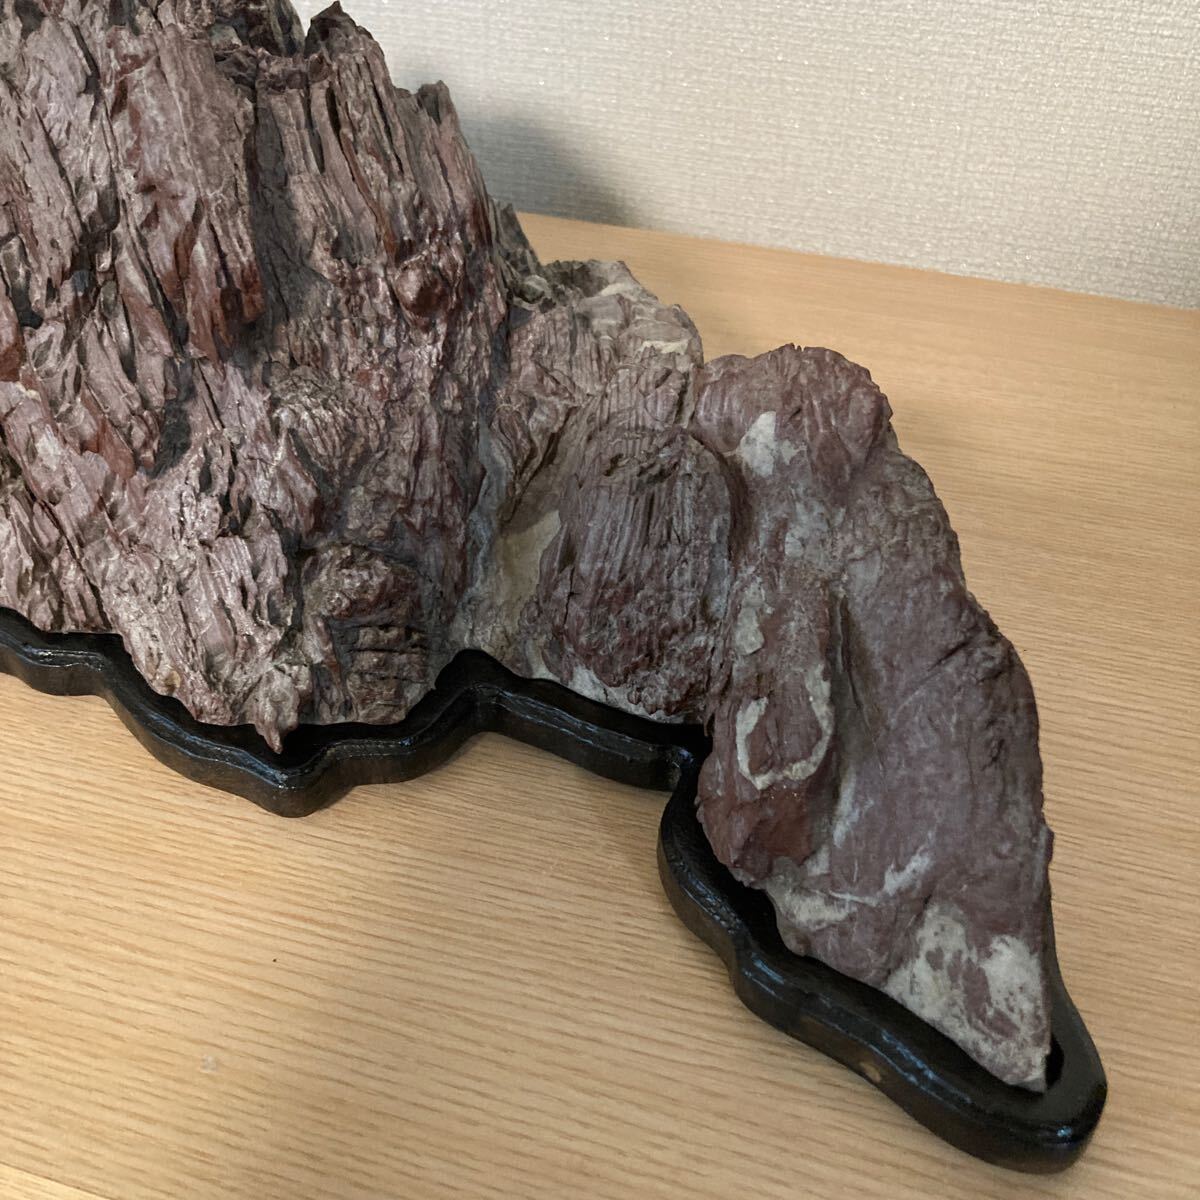 # suiseki st # appreciation stone # tray stone # natural stone #E-149